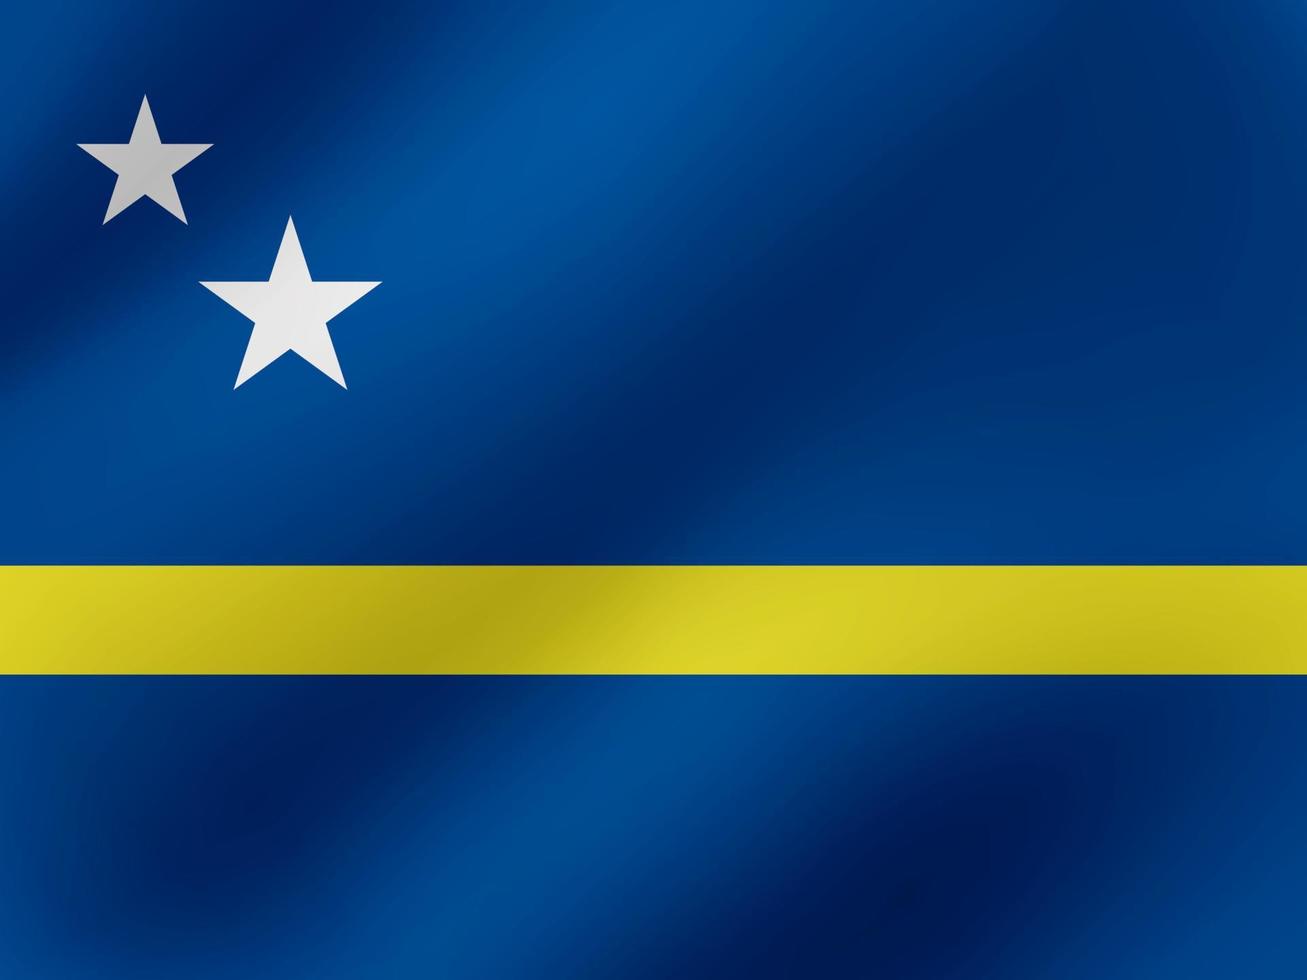 Vektor realistische wellenförmige Illustration des Curaçao-Flaggendesigns